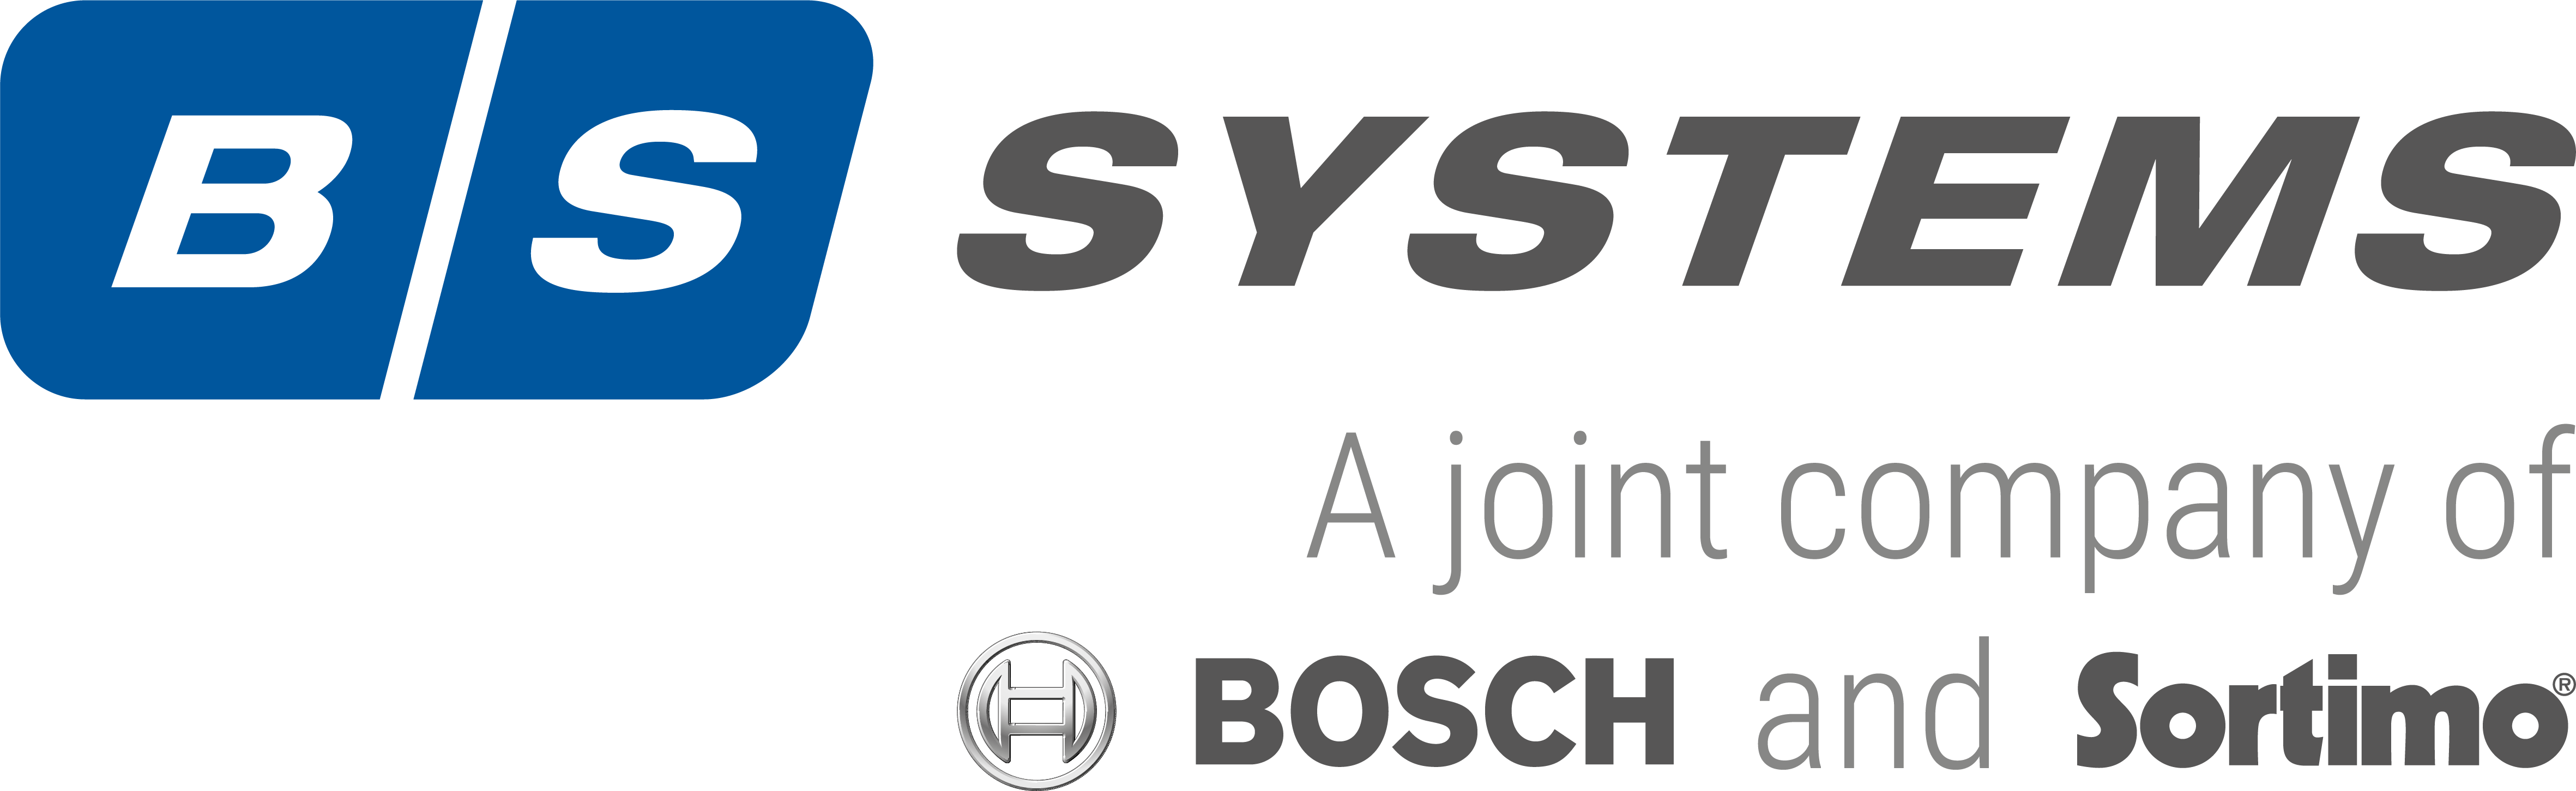 BS-Systems L-BOXX 136 BSS Classic, Schwarz / Anthrazit